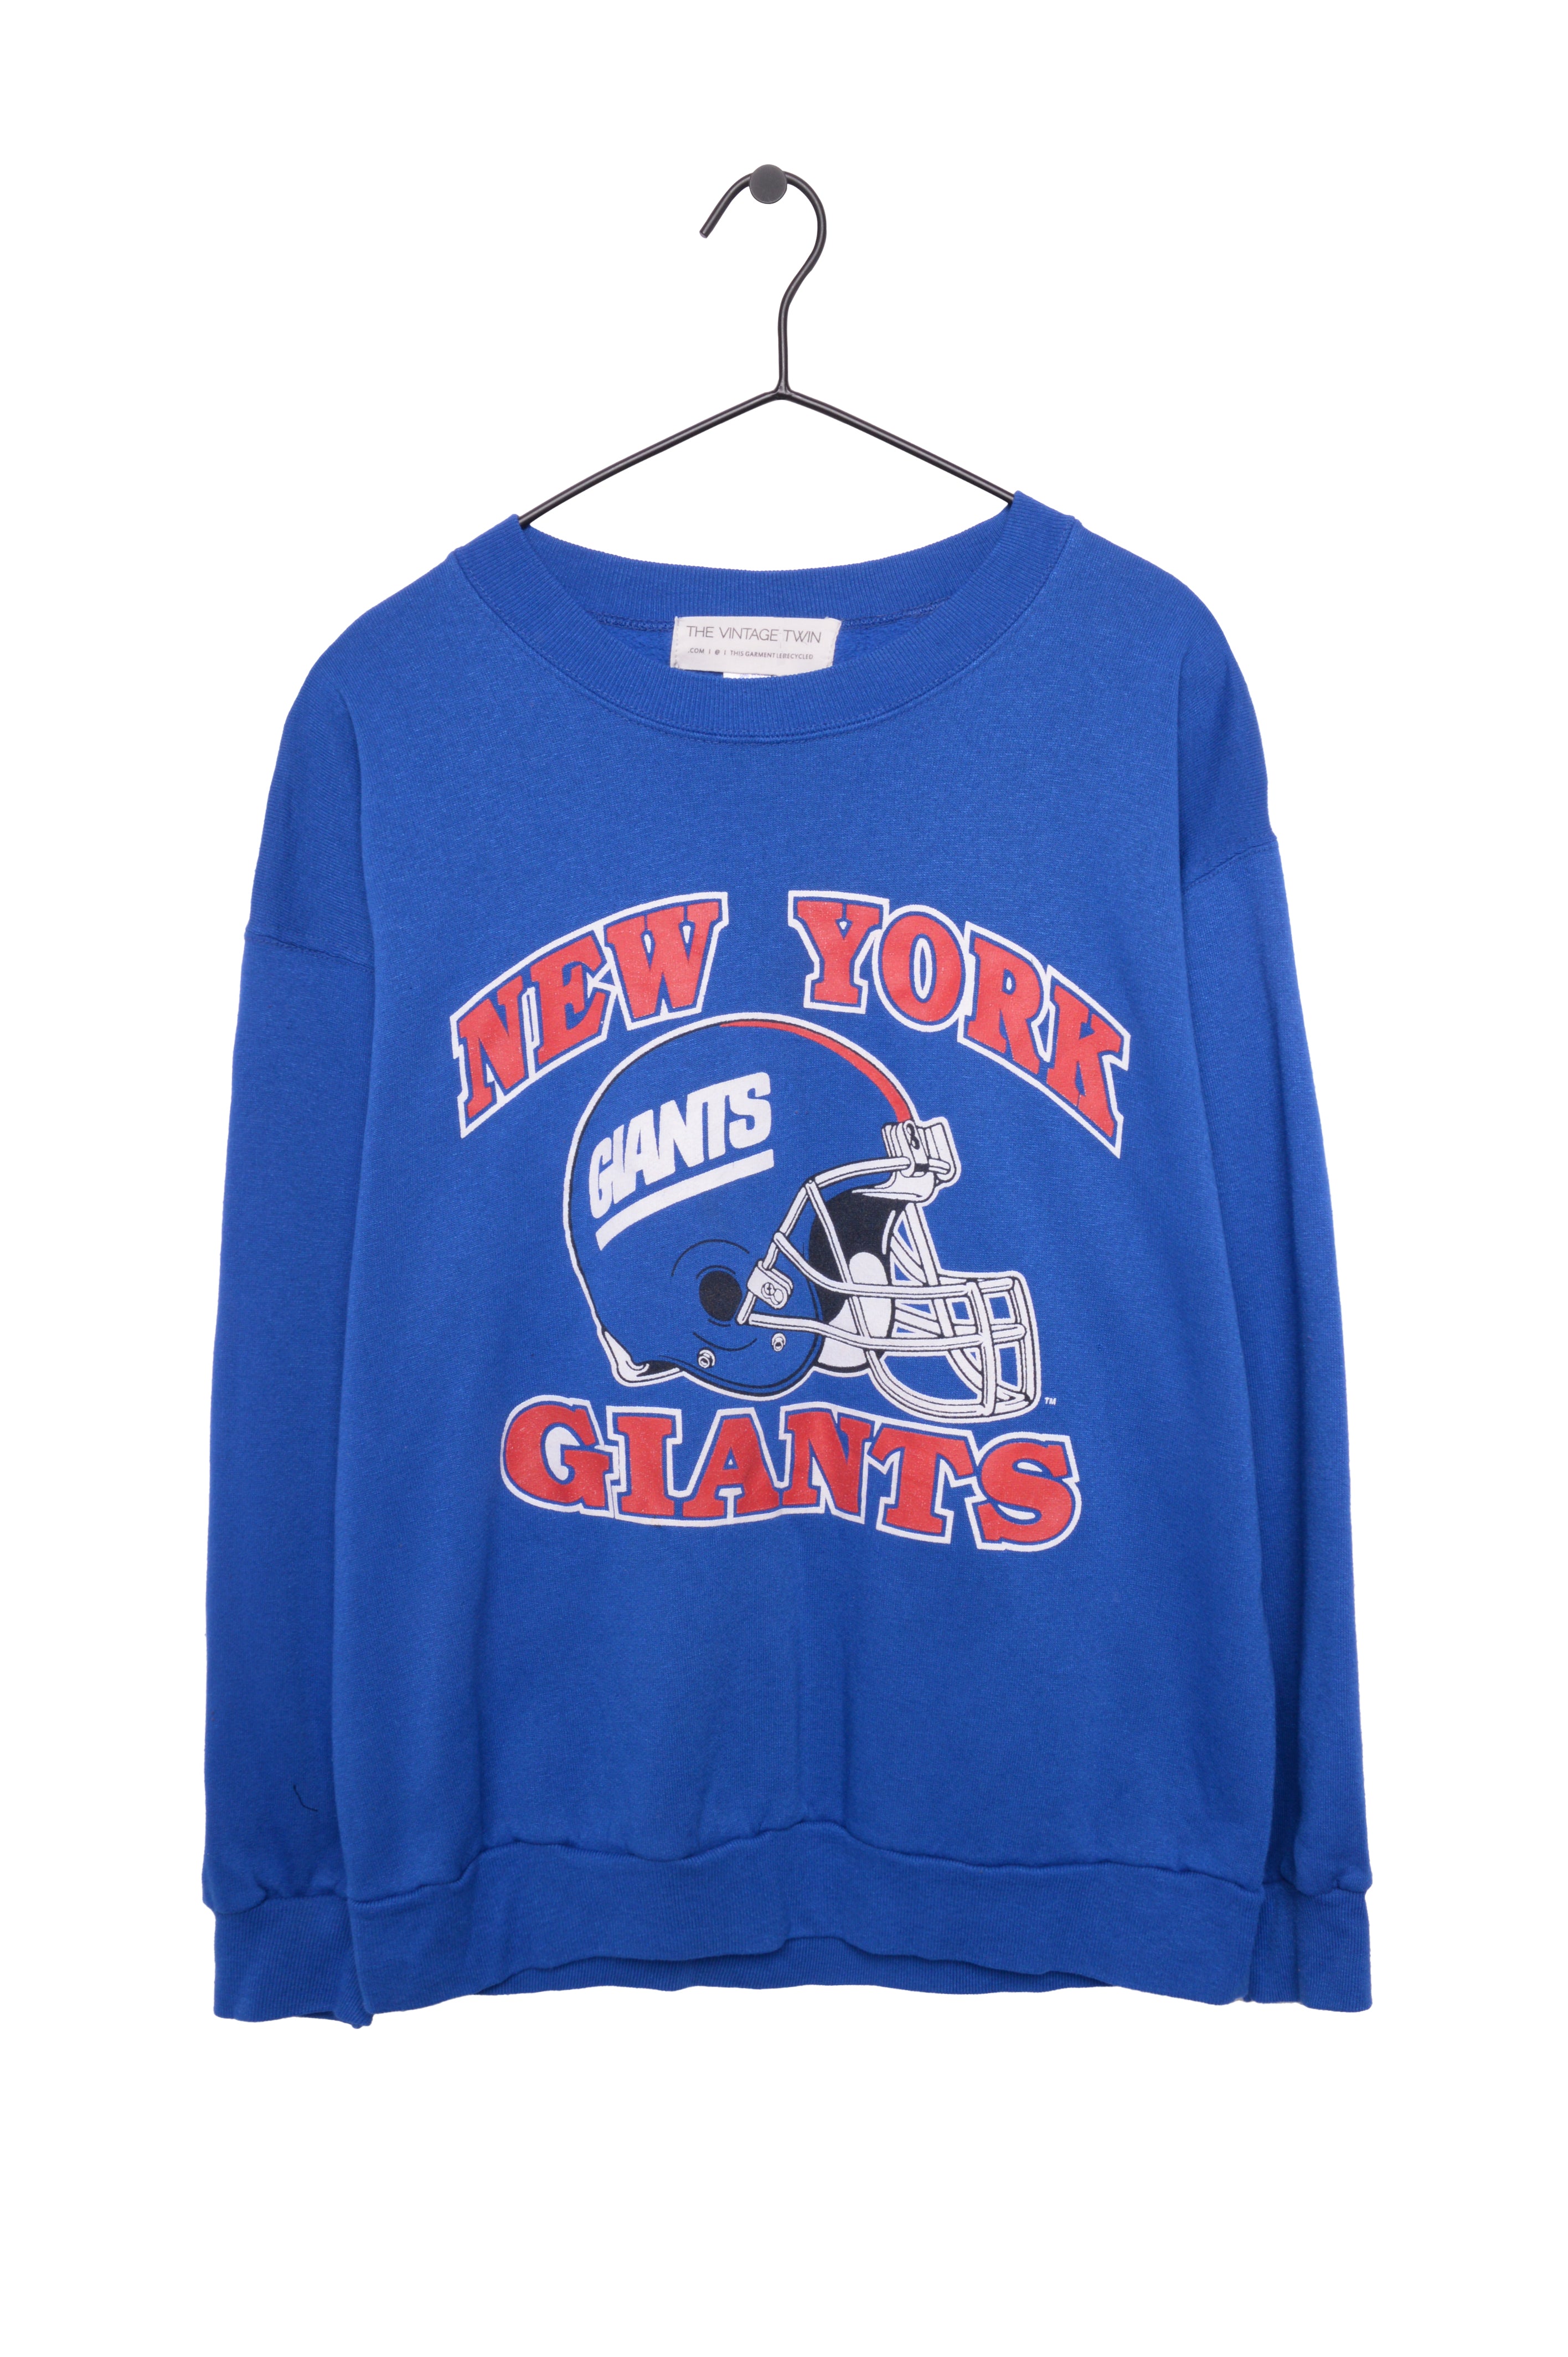 New York Giants Sweatshirt USA Free Shipping - The Vintage Twin